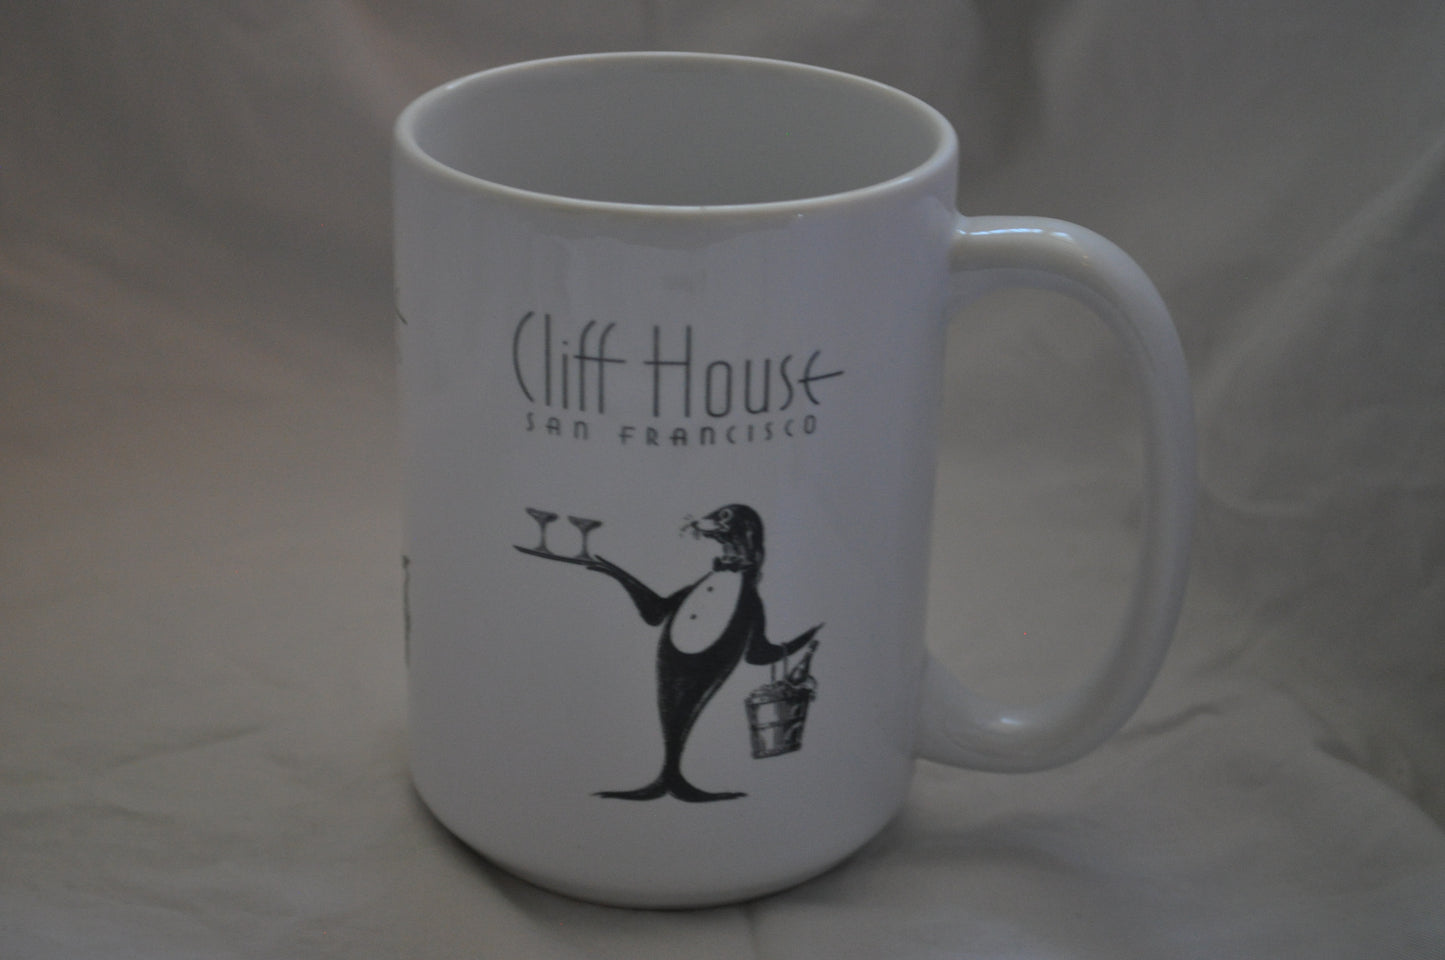 Cliff House Seal Mug